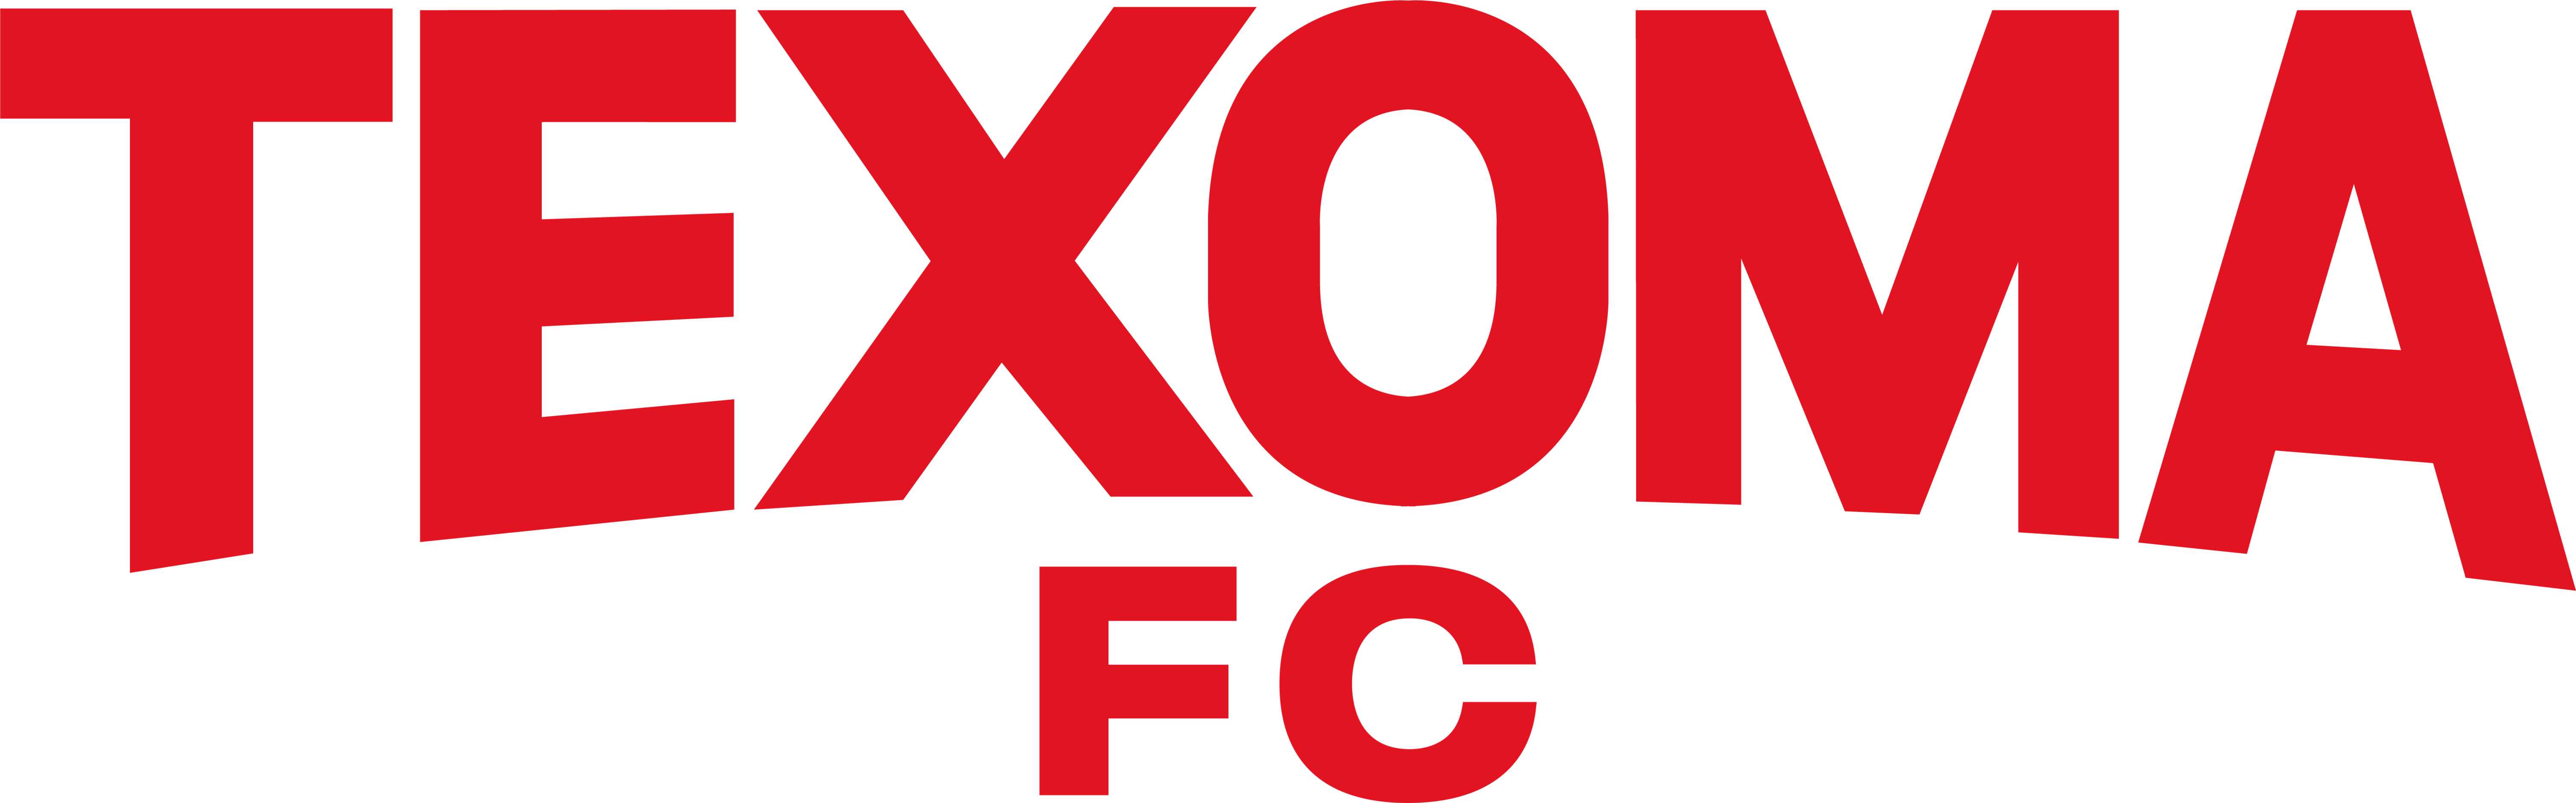 Texoma FC Workmark. (Courtesy Texoma FC)